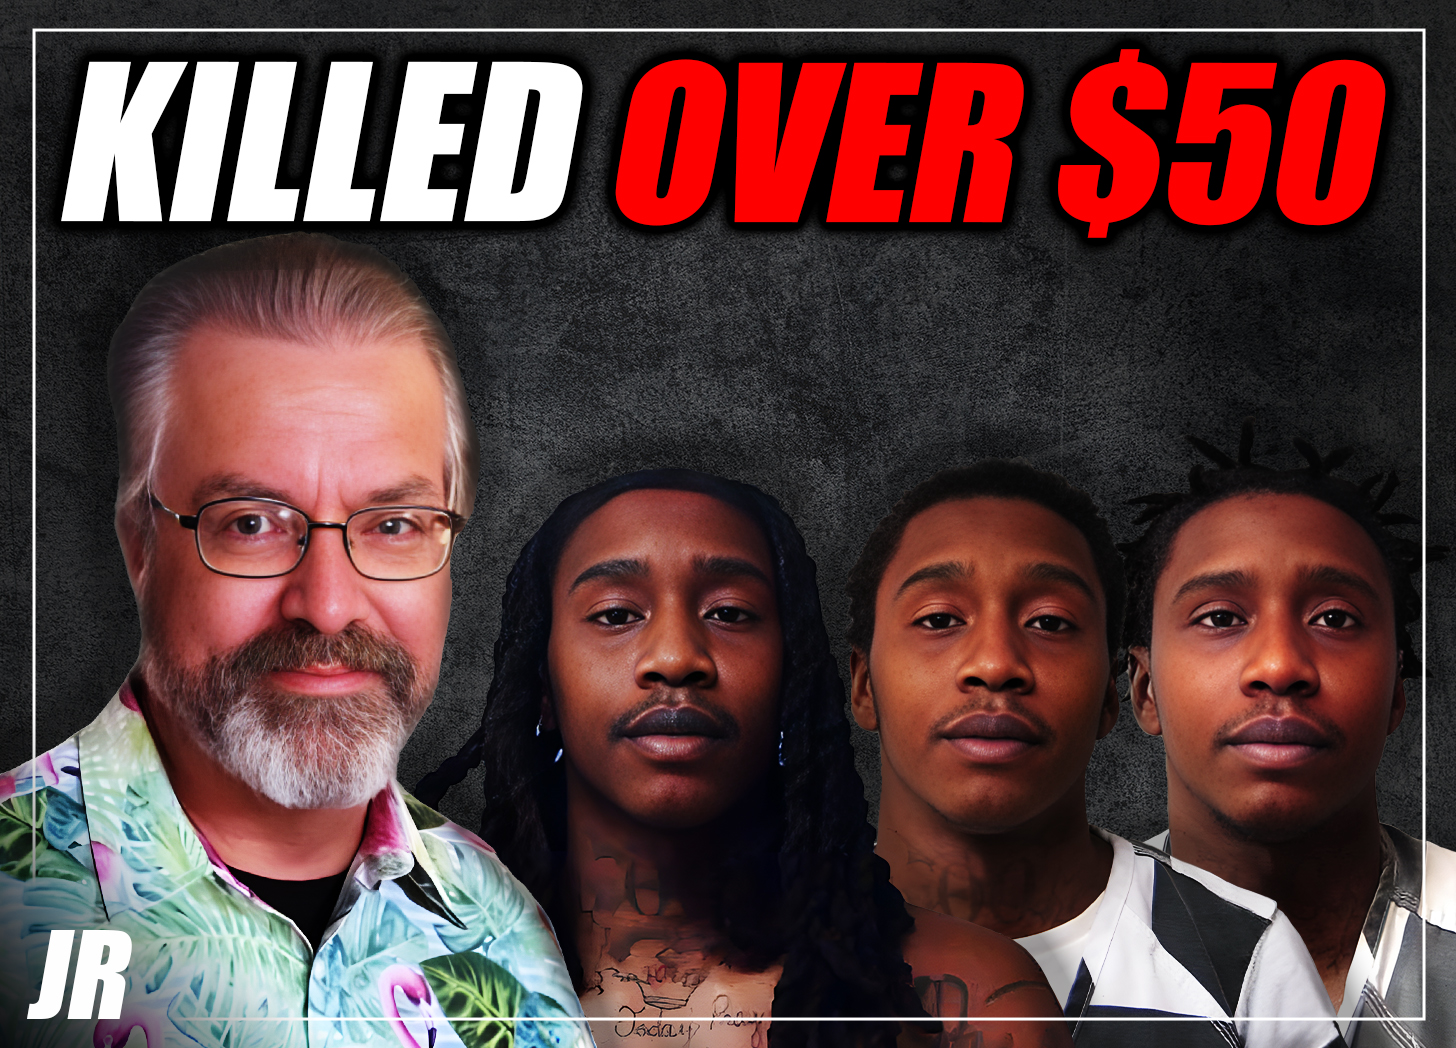 Black career criminal arrested for killing White man over $50 fee